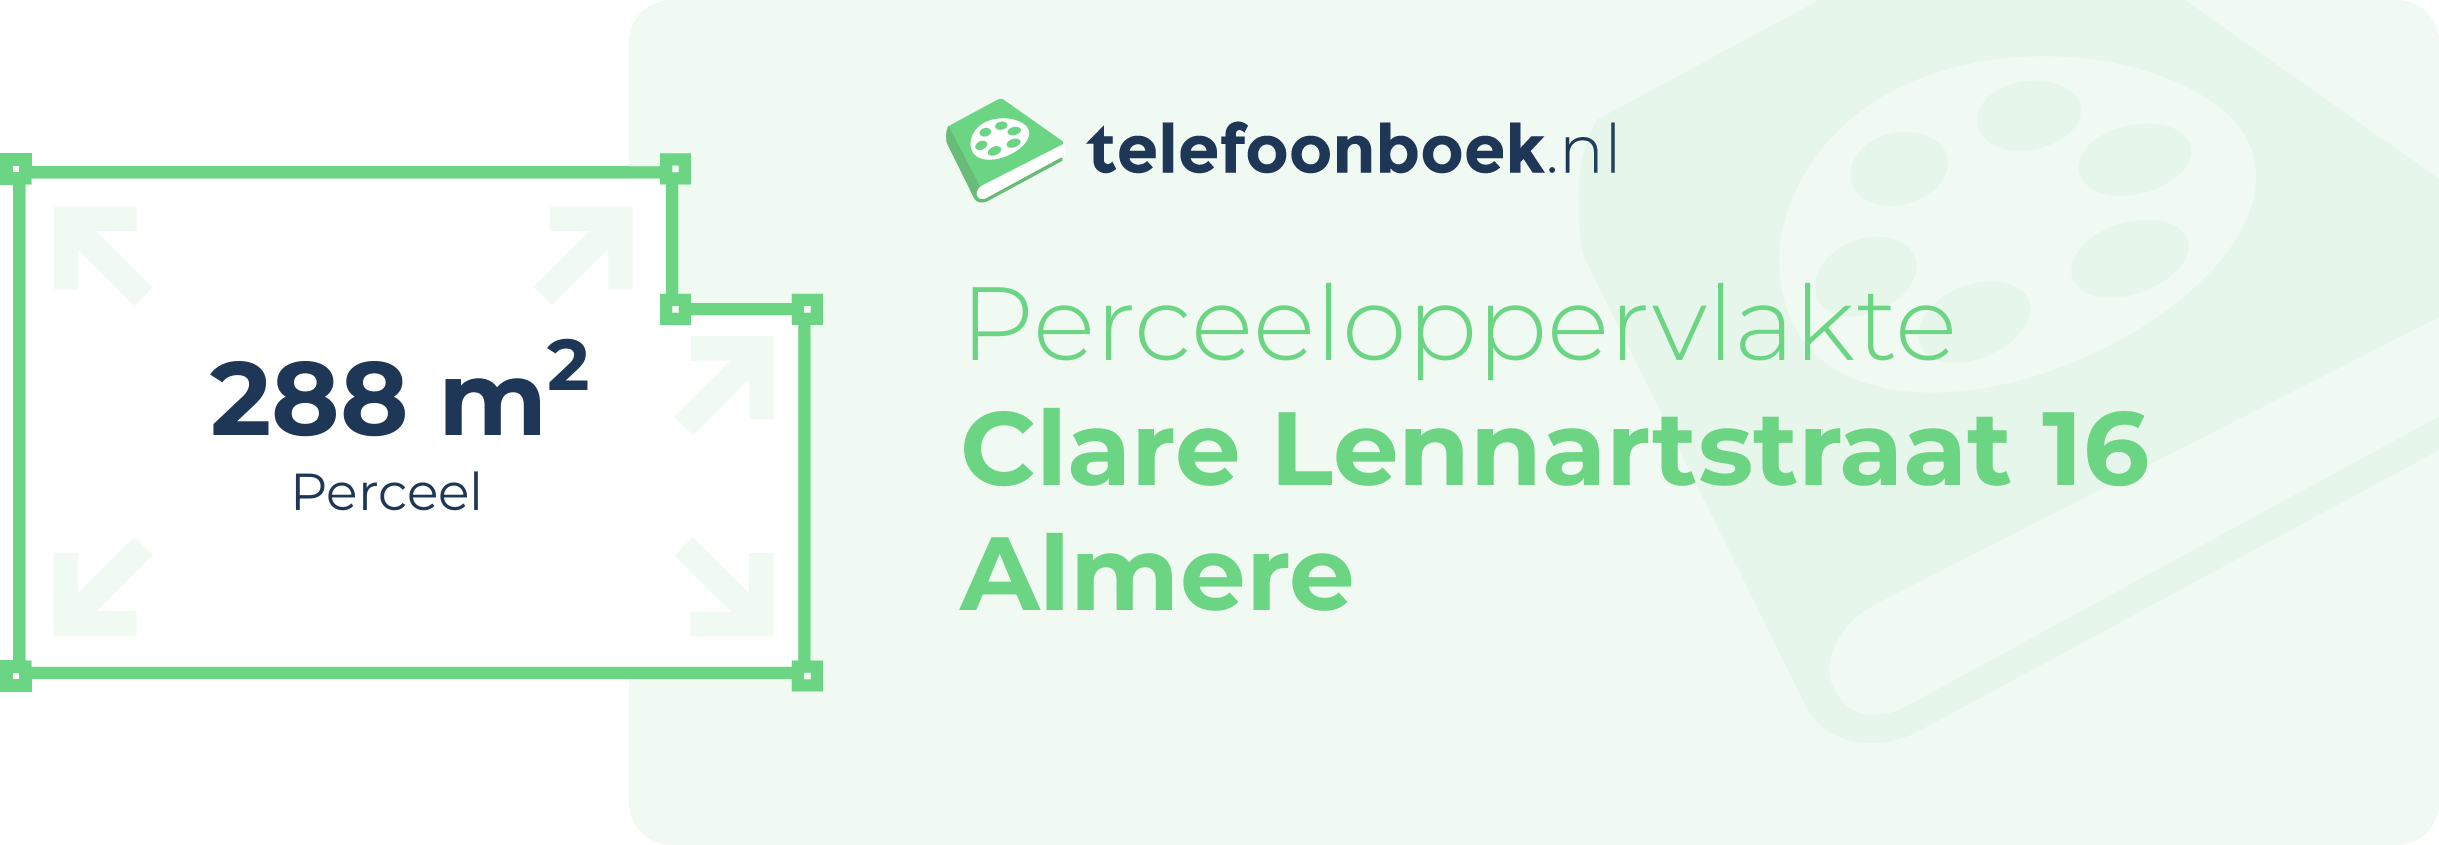 Perceeloppervlakte Clare Lennartstraat 16 Almere